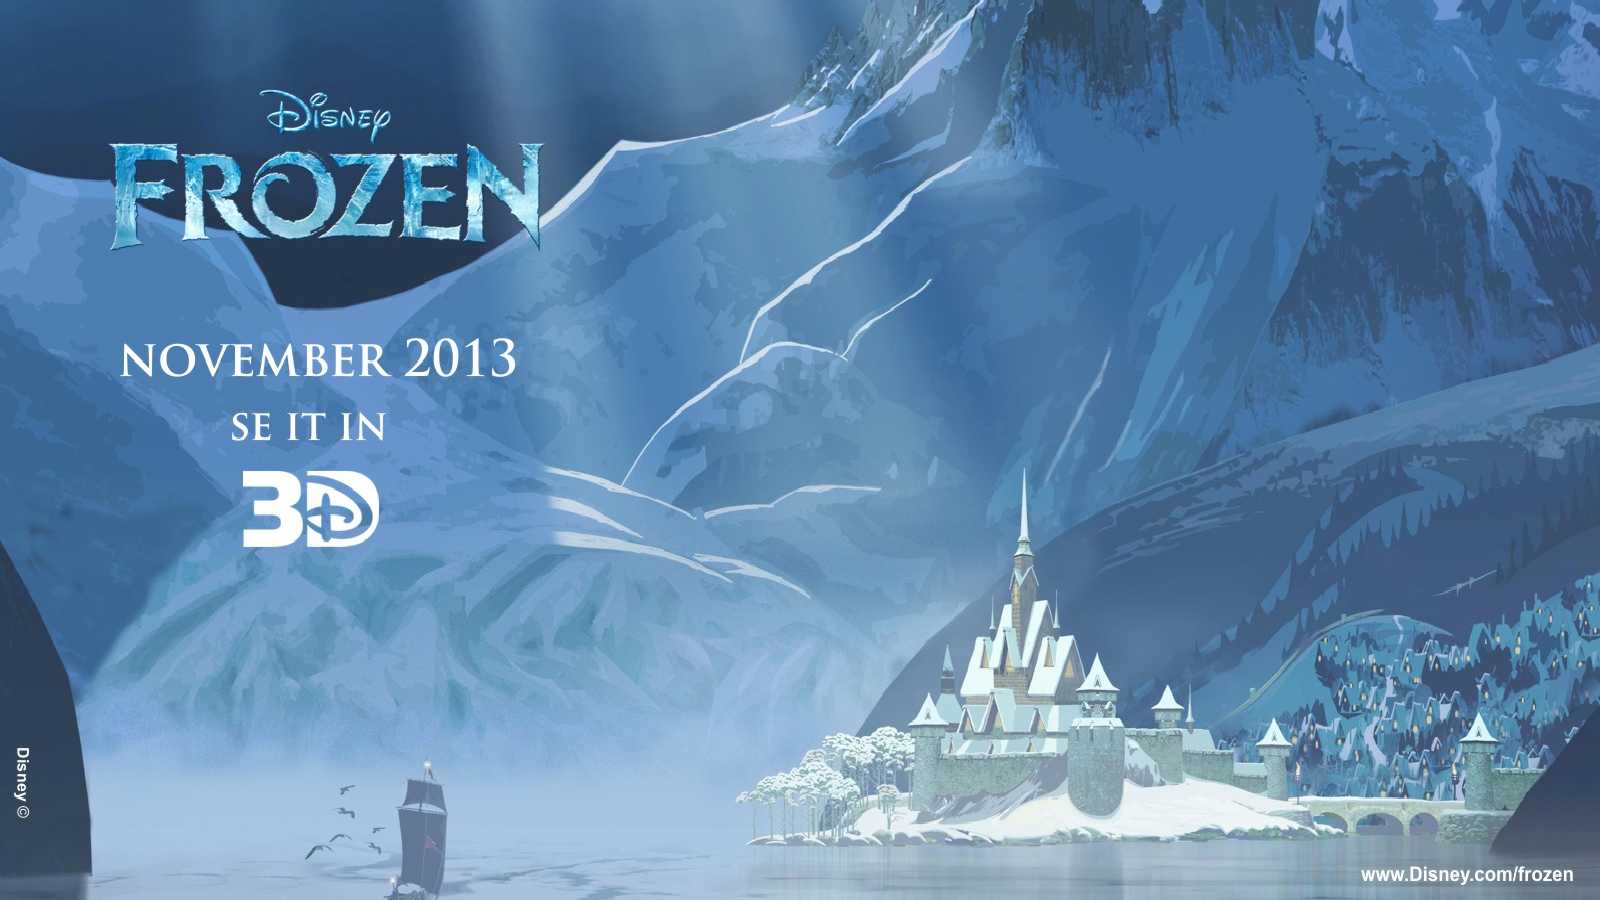 Frozen Frozen